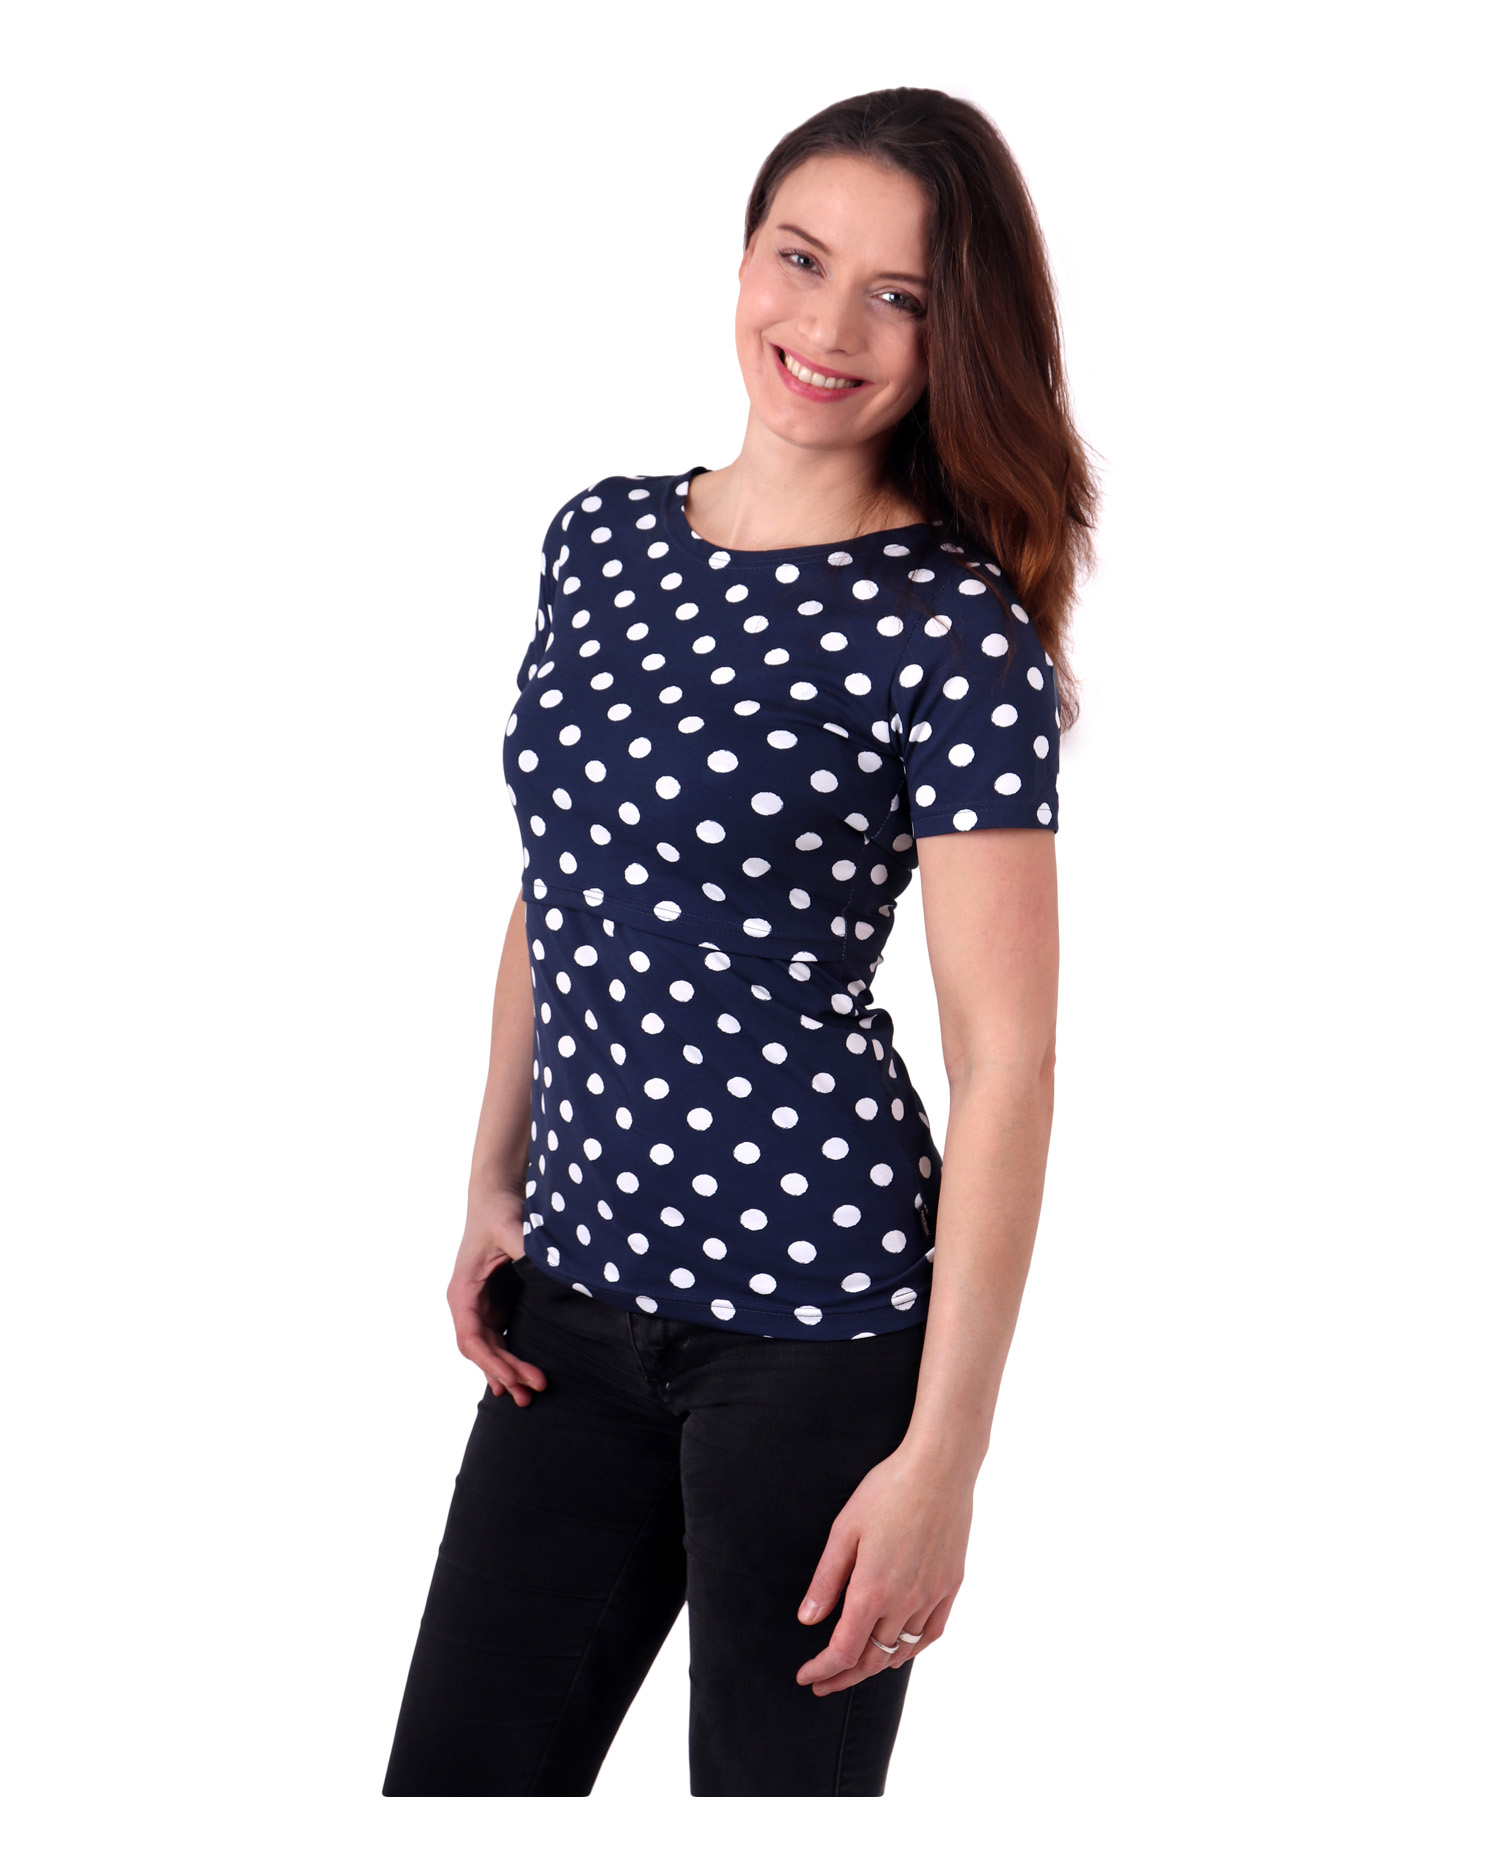 Breast-feeding T-shirt Lenka, short sleeves, blue with polka dots